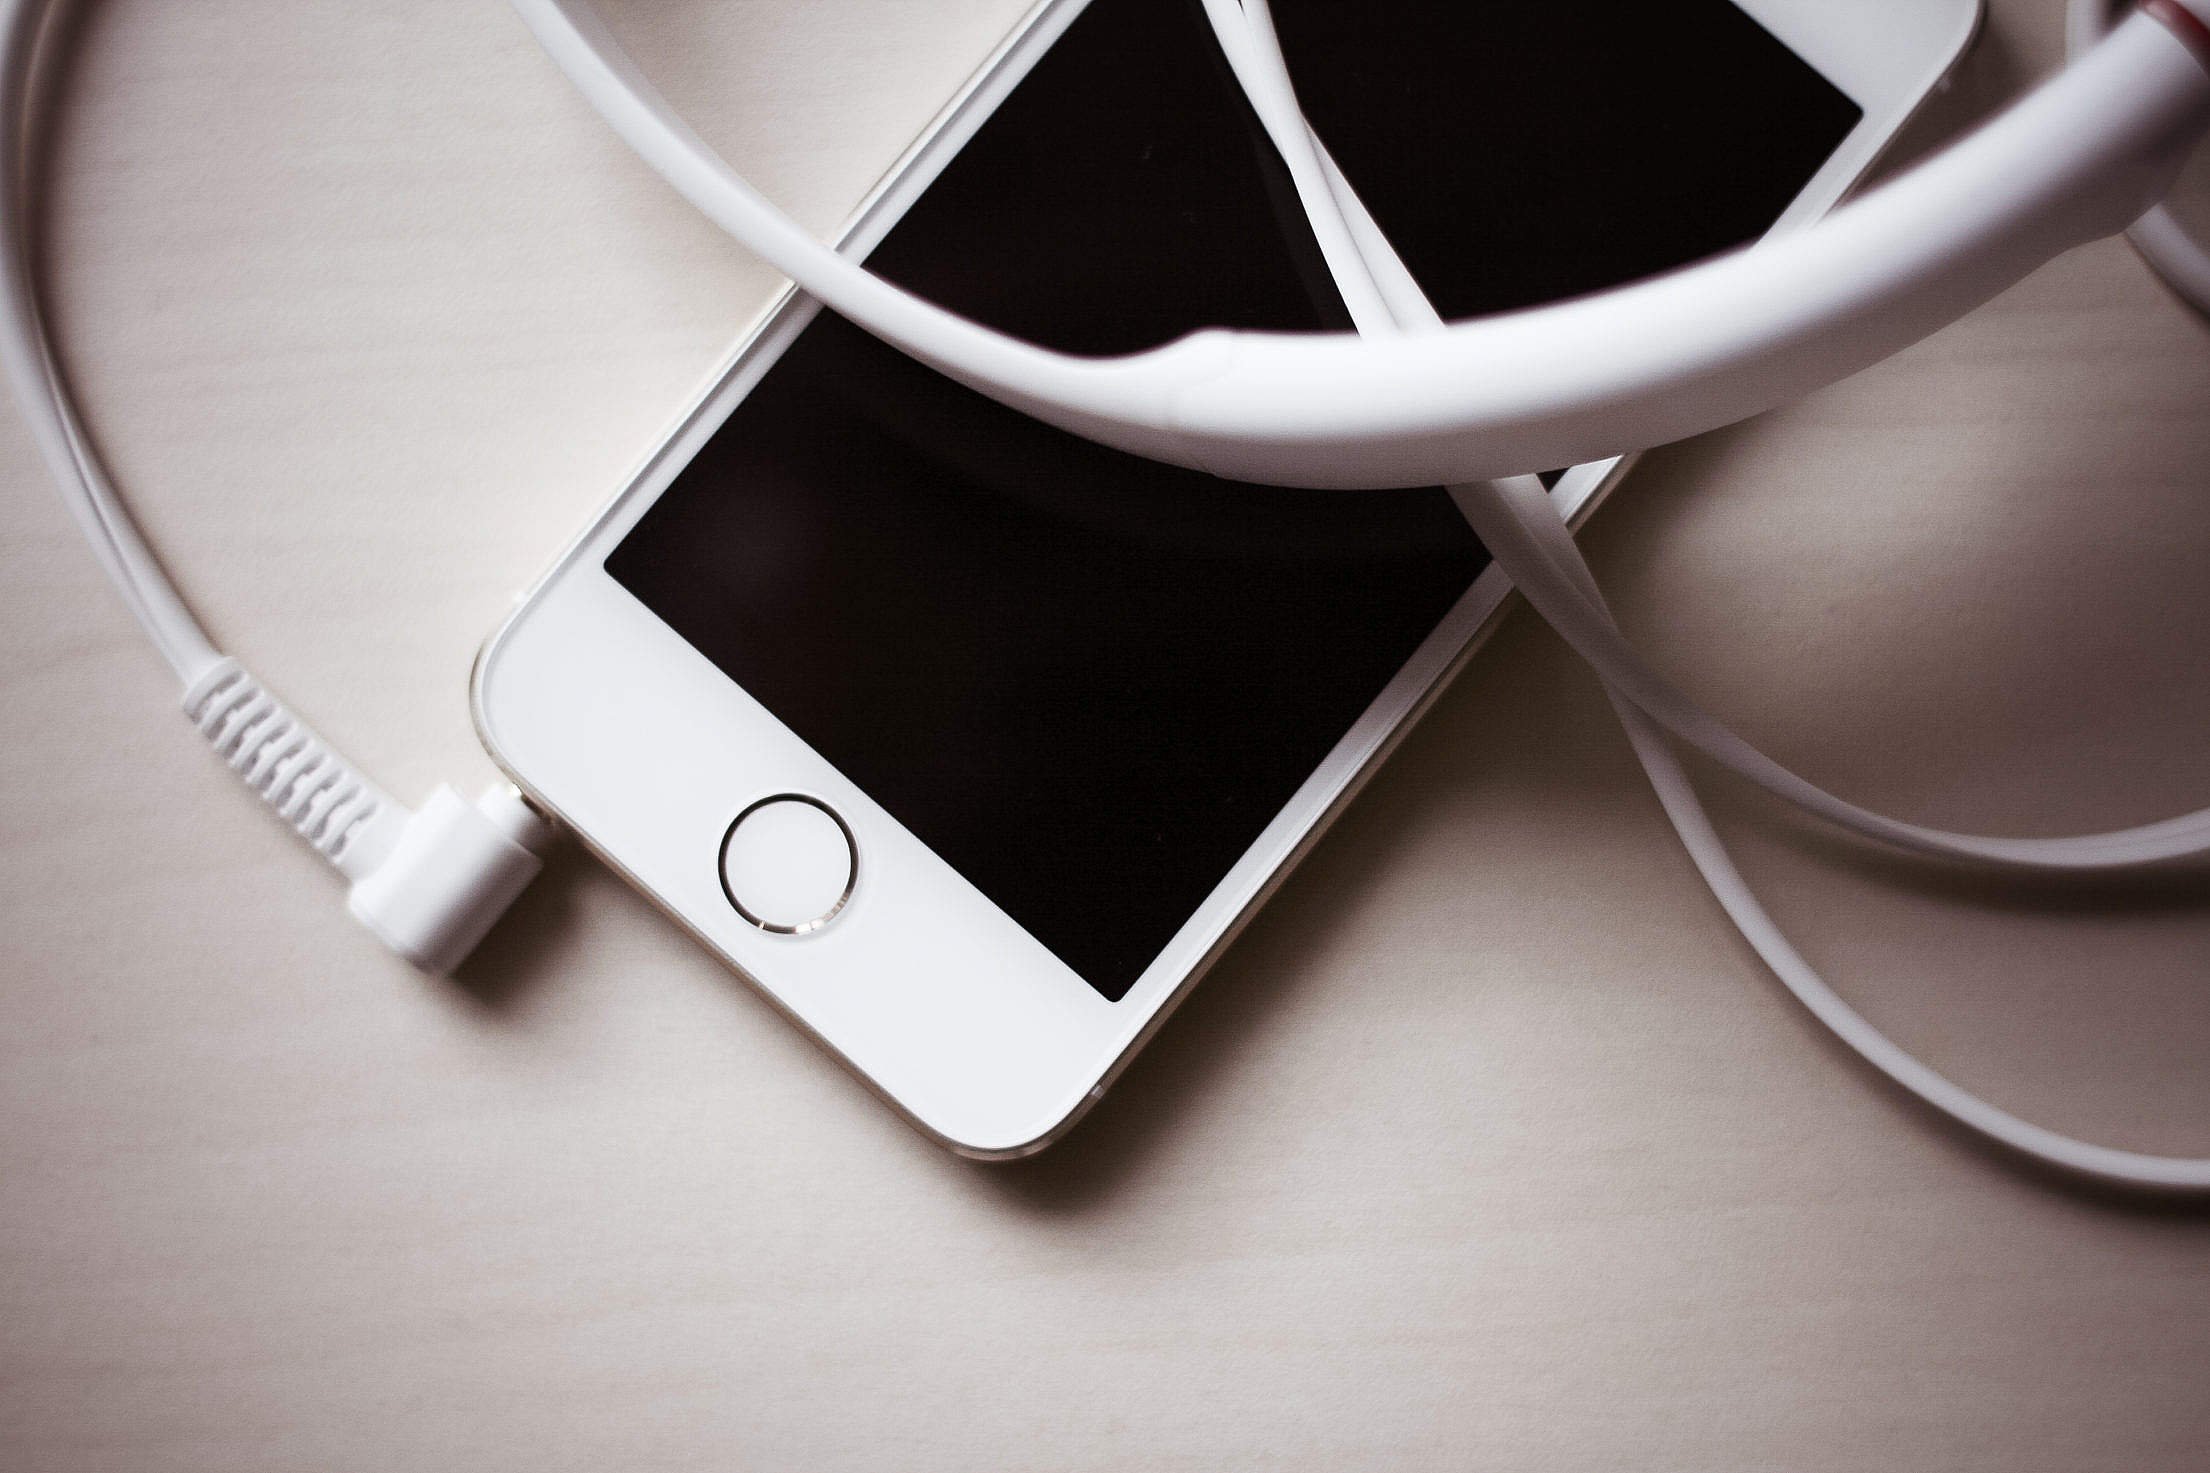 White iPhone 5S With Headphones Free Stock Photo